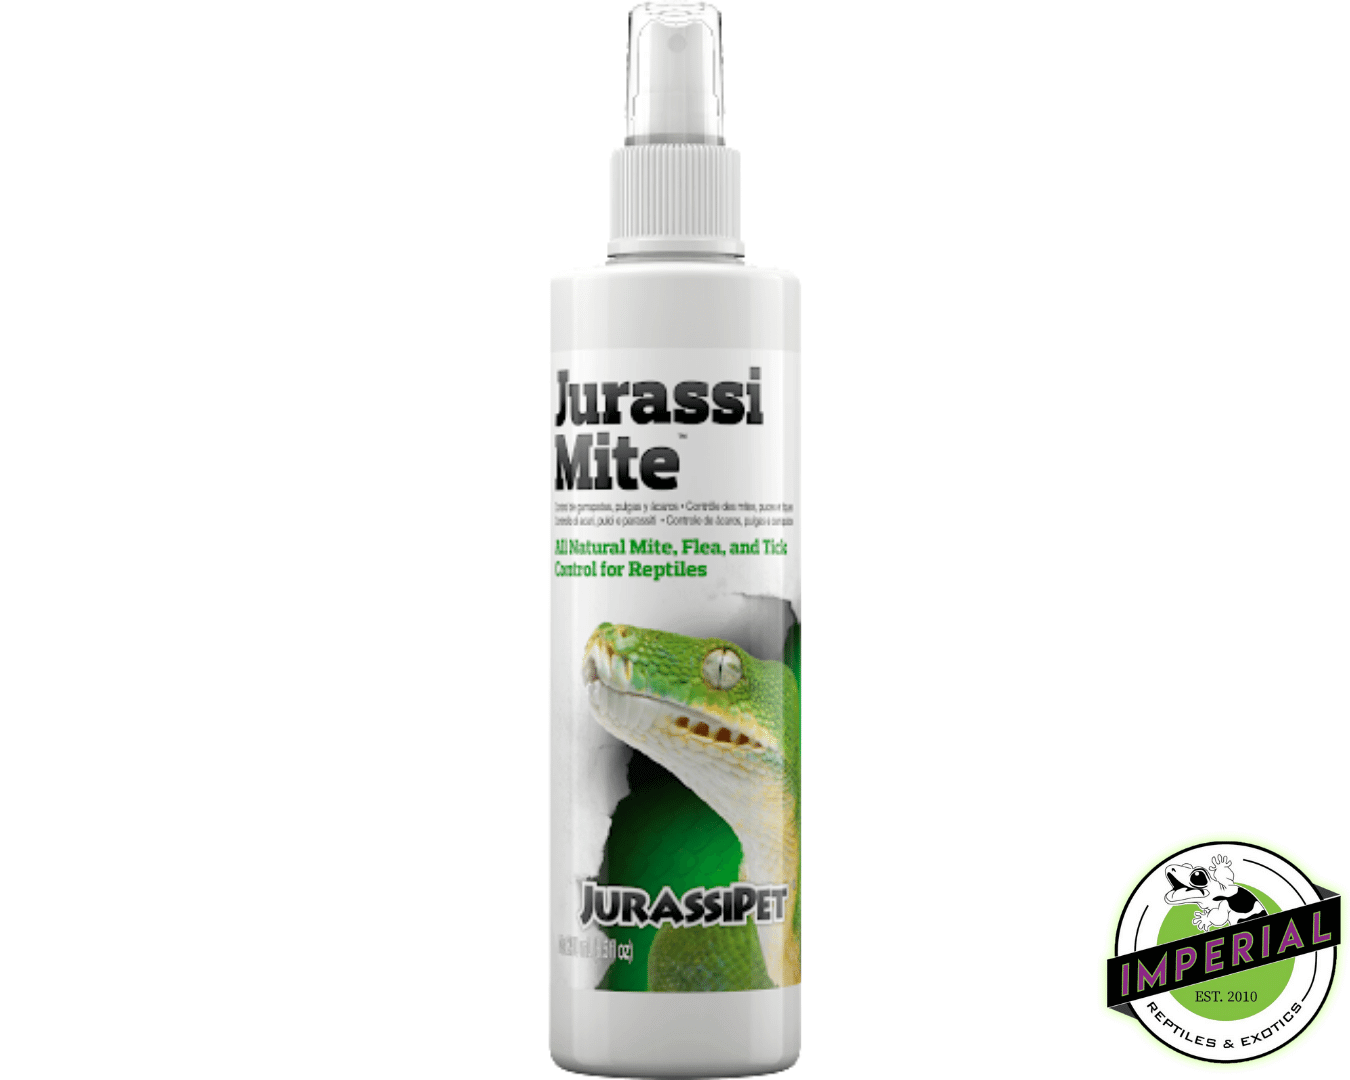 reptile mite spray for sale online, buy cheap reptile supplies near me